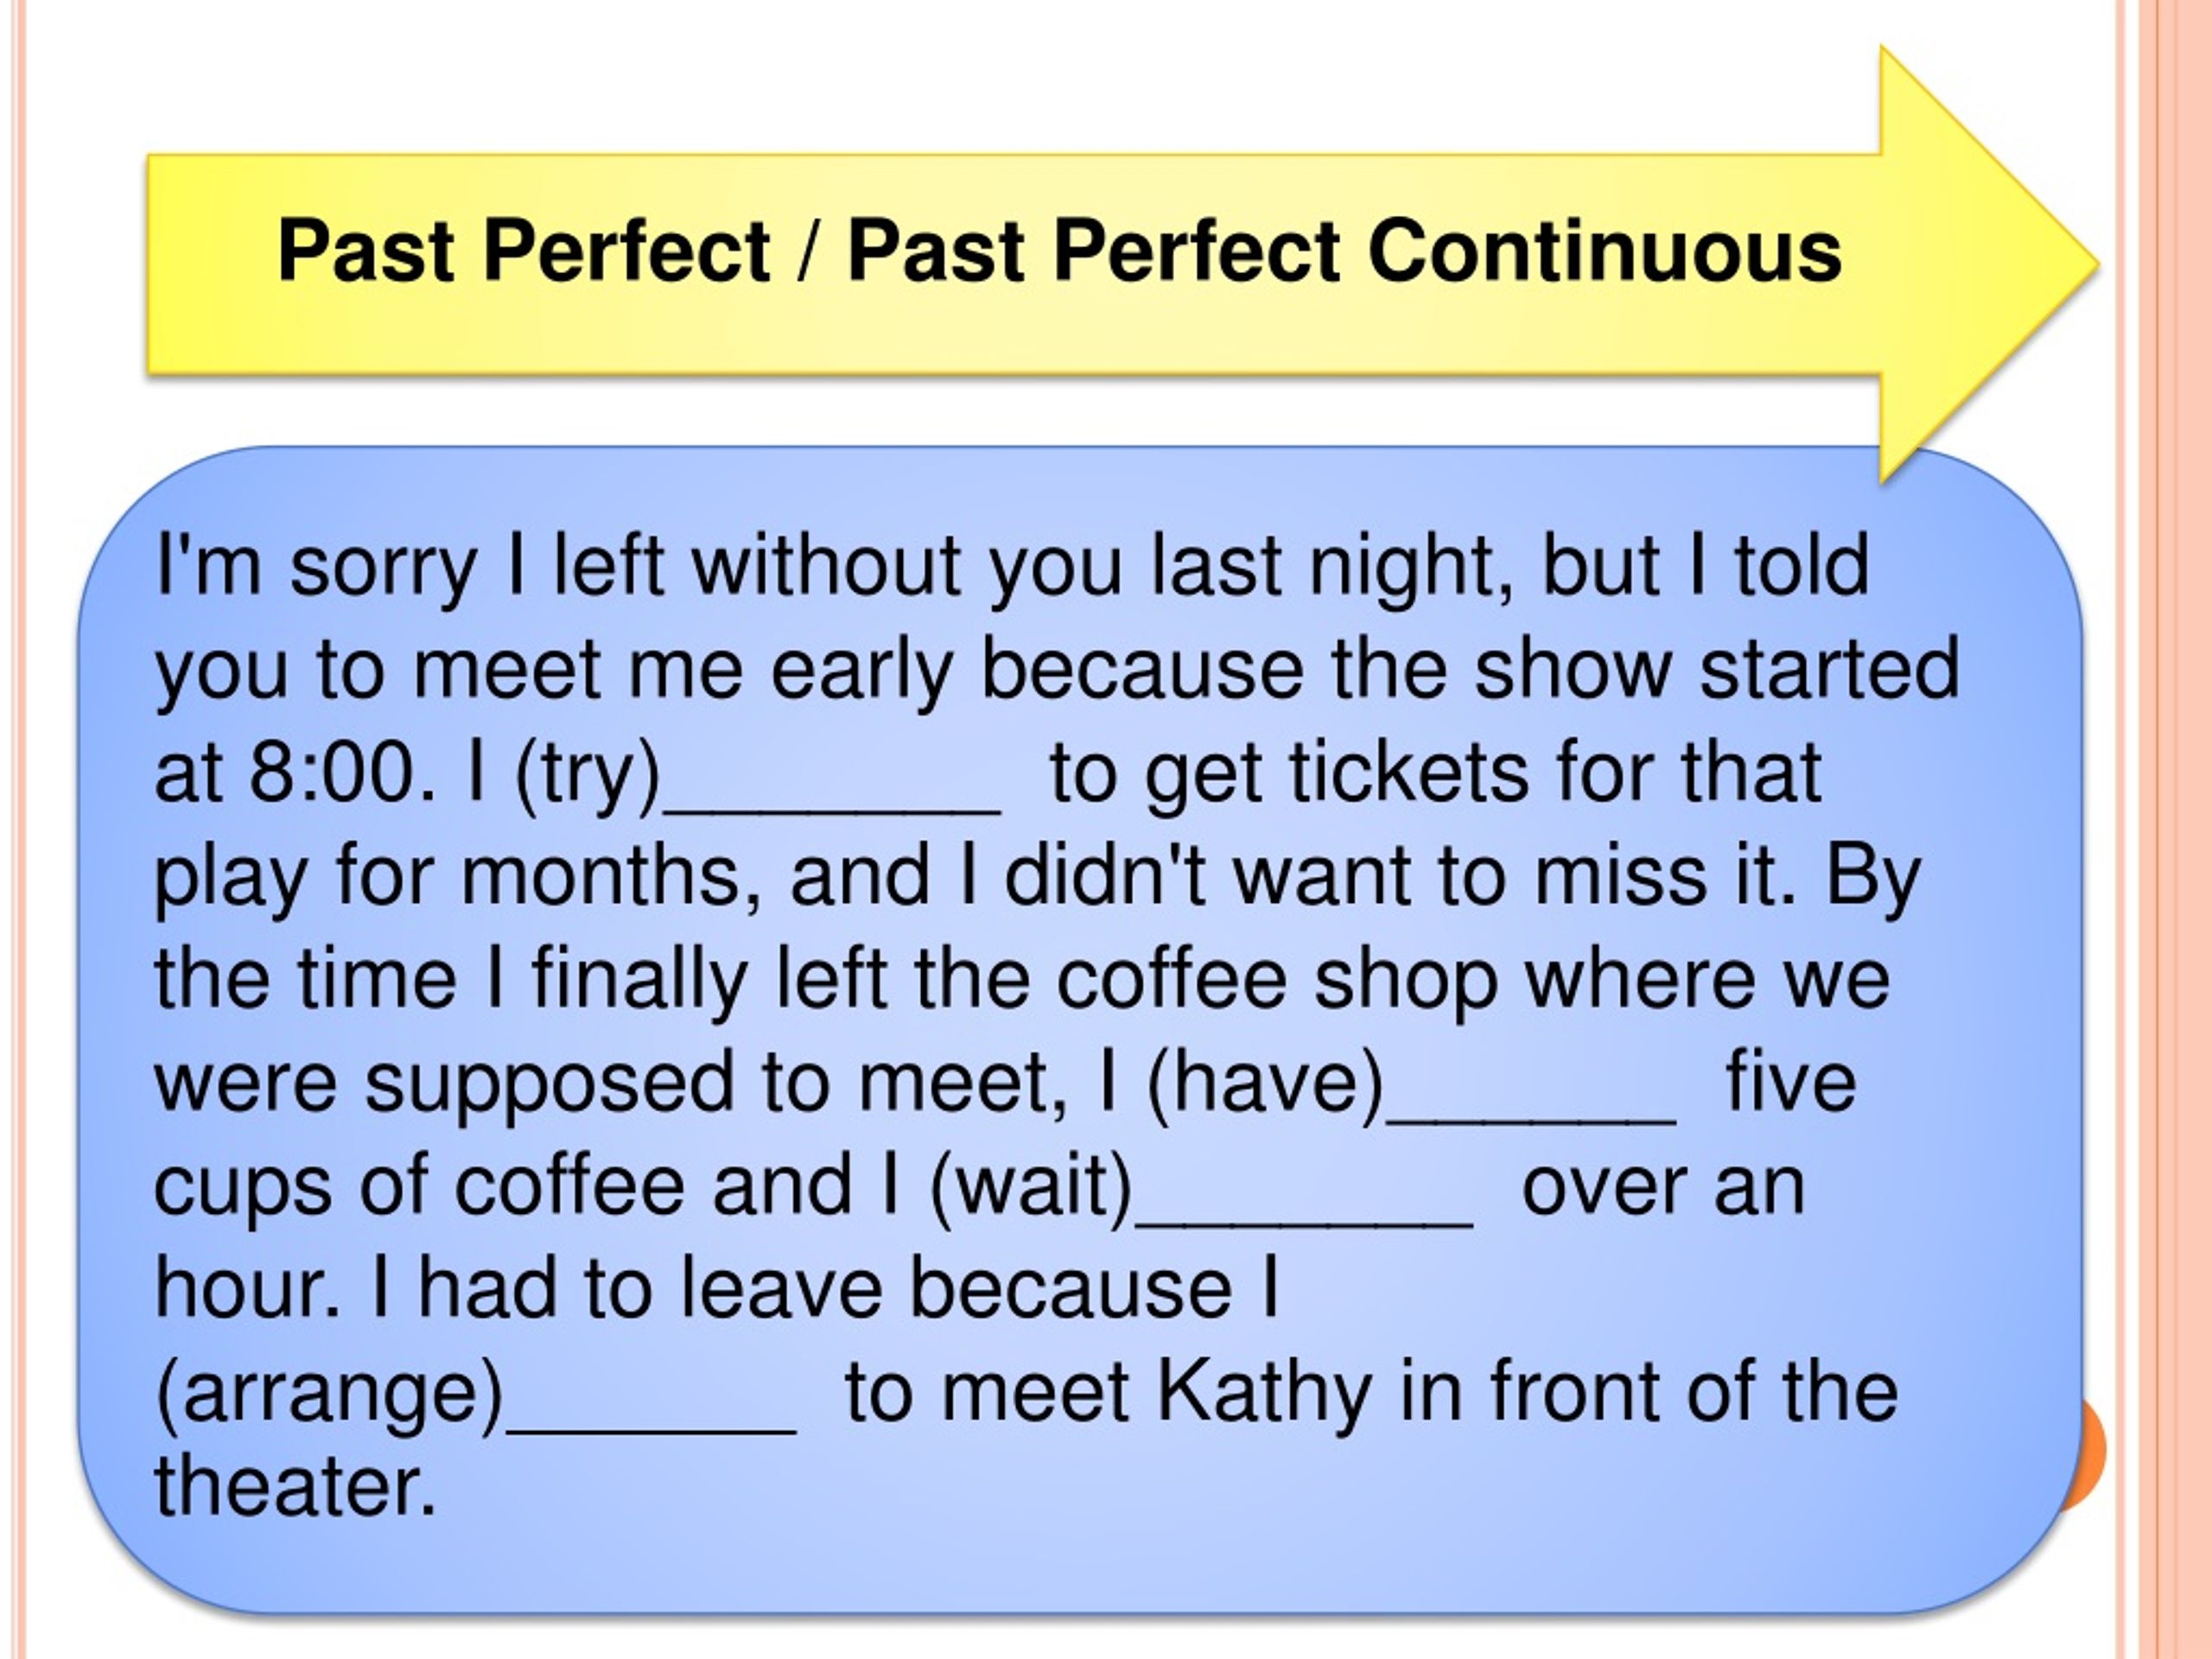 Past perfect tense упражнения. Past perfect past perfect Continuous упражнения 8 класс. Past perfect past perfect Continuous упражнения. Past perfect Continuous упражнения. Past perfect упражнения.